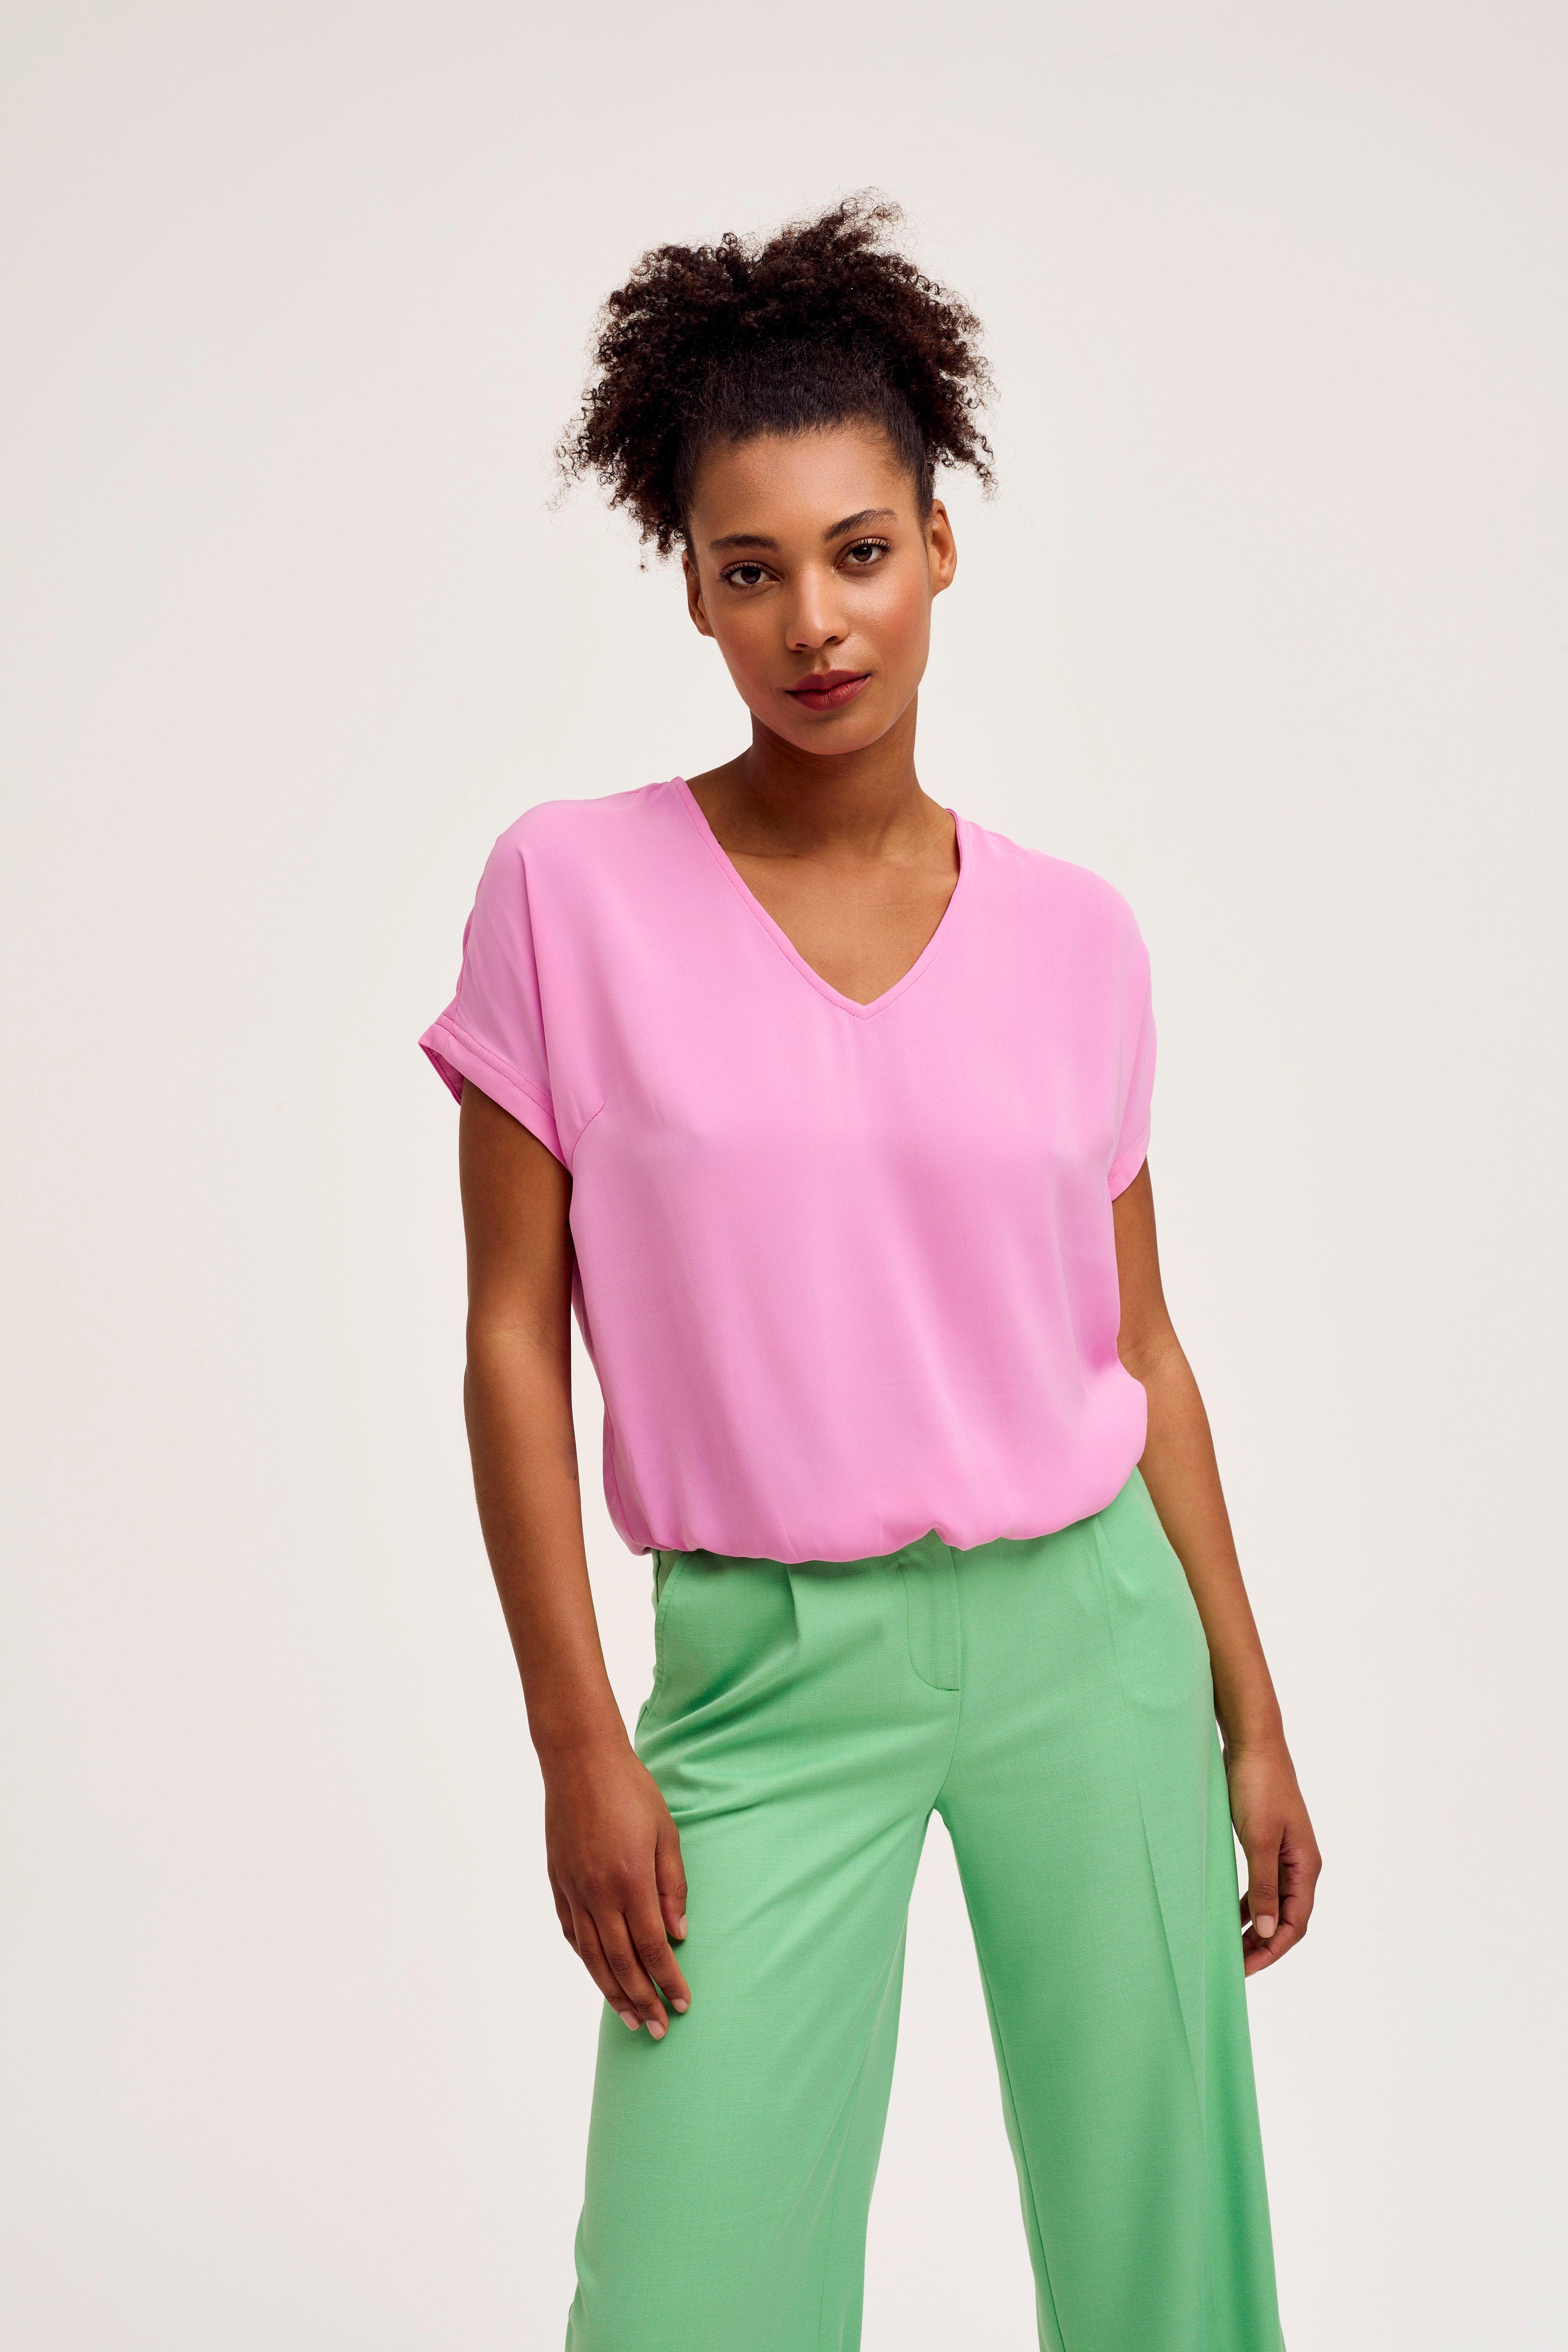 CKS Dames - EBINAS - blouse korte mouwen - roze